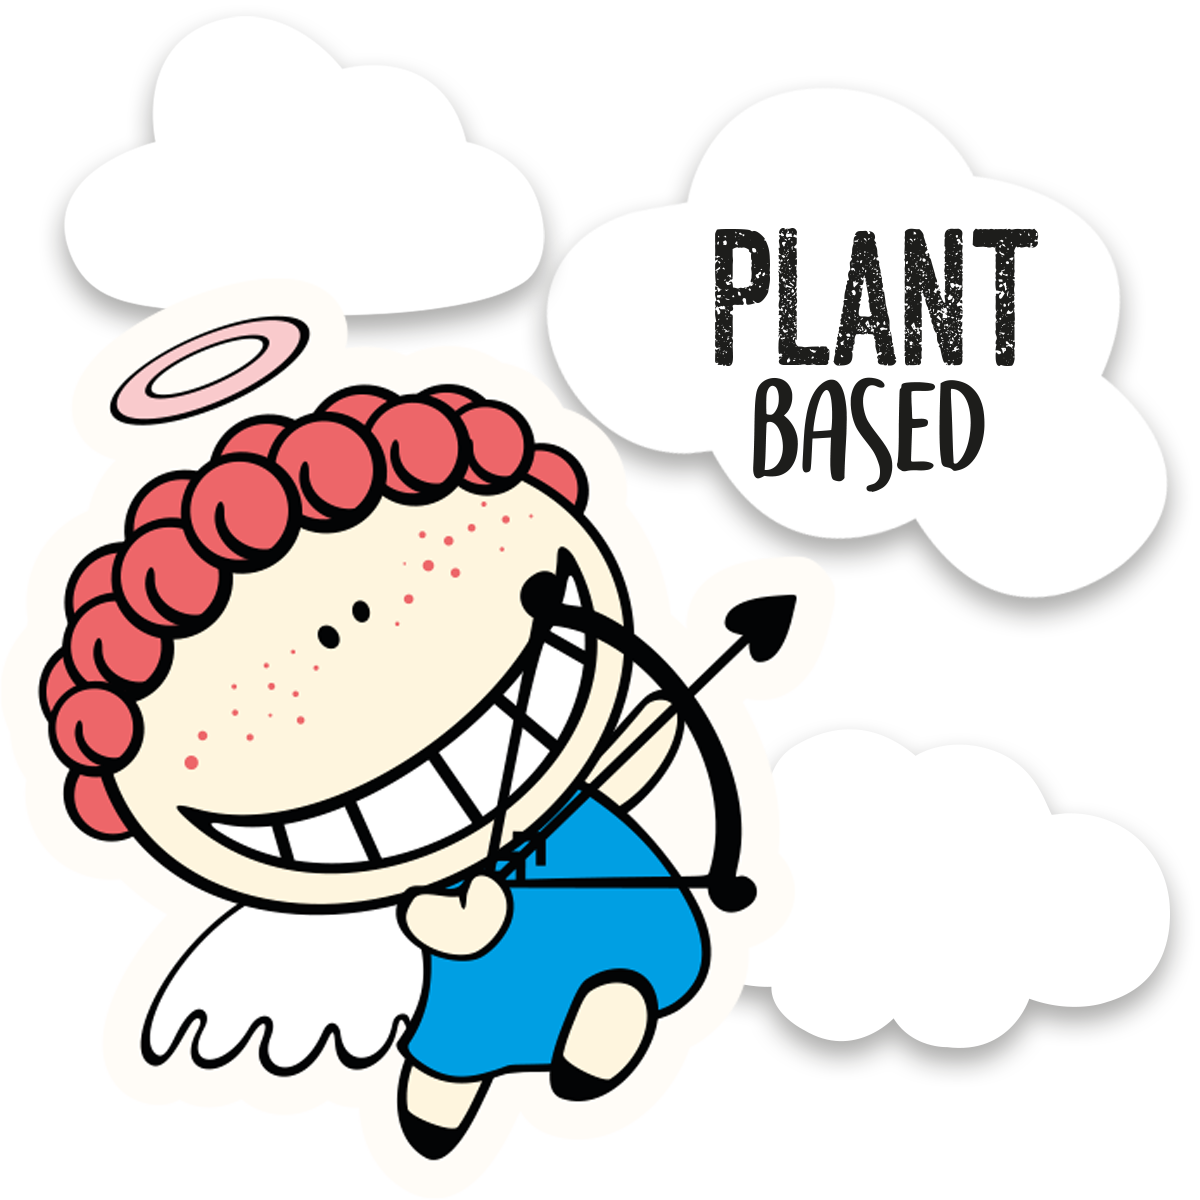 Plant Based Foods